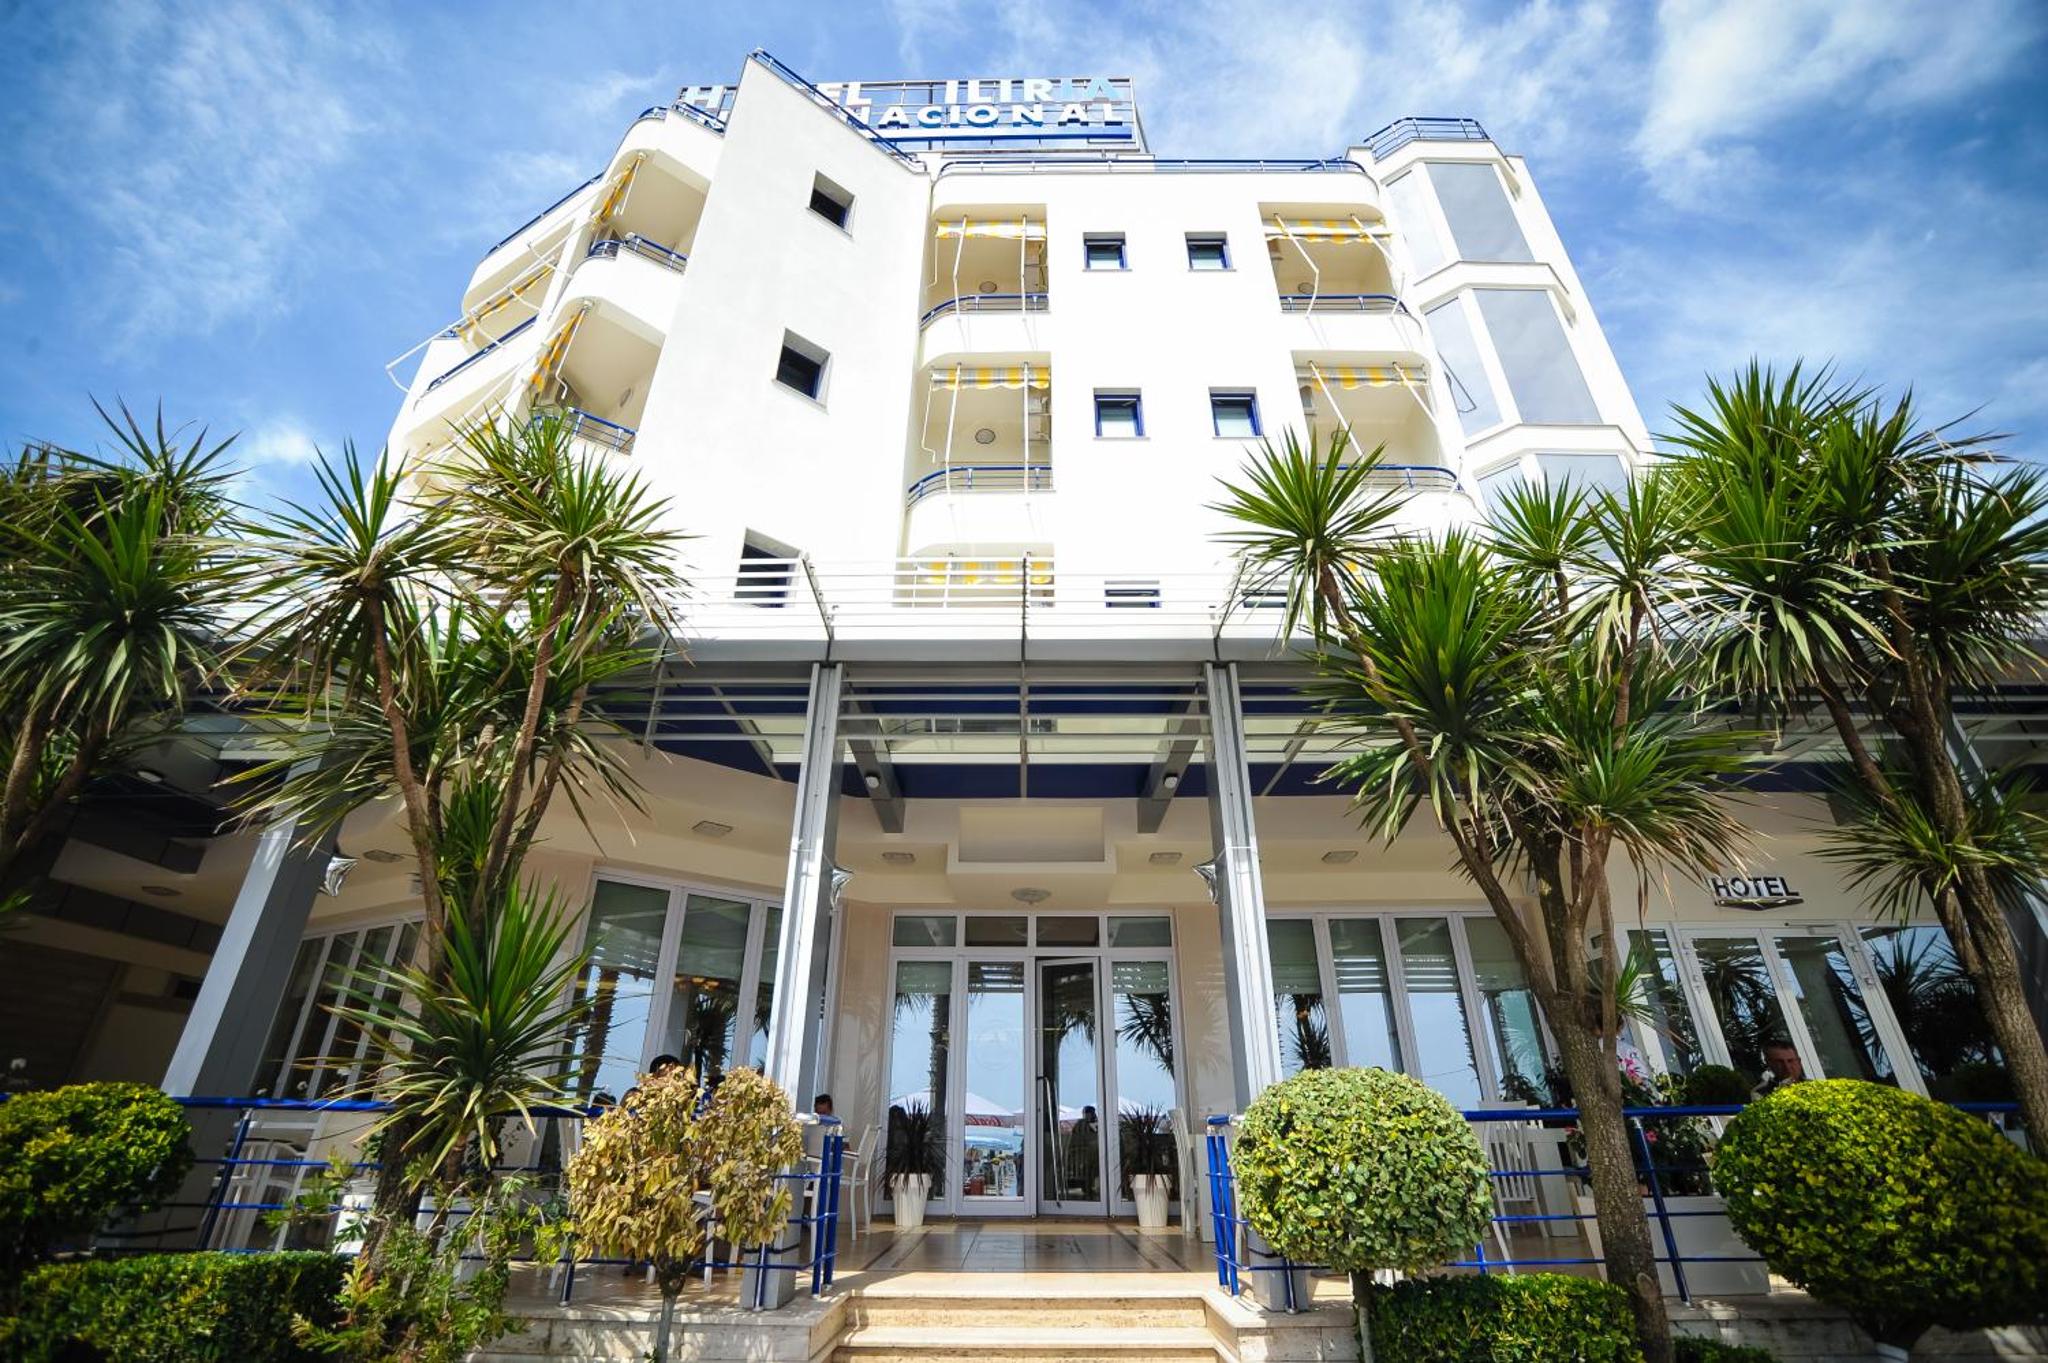 Ilira Internacional Hotel